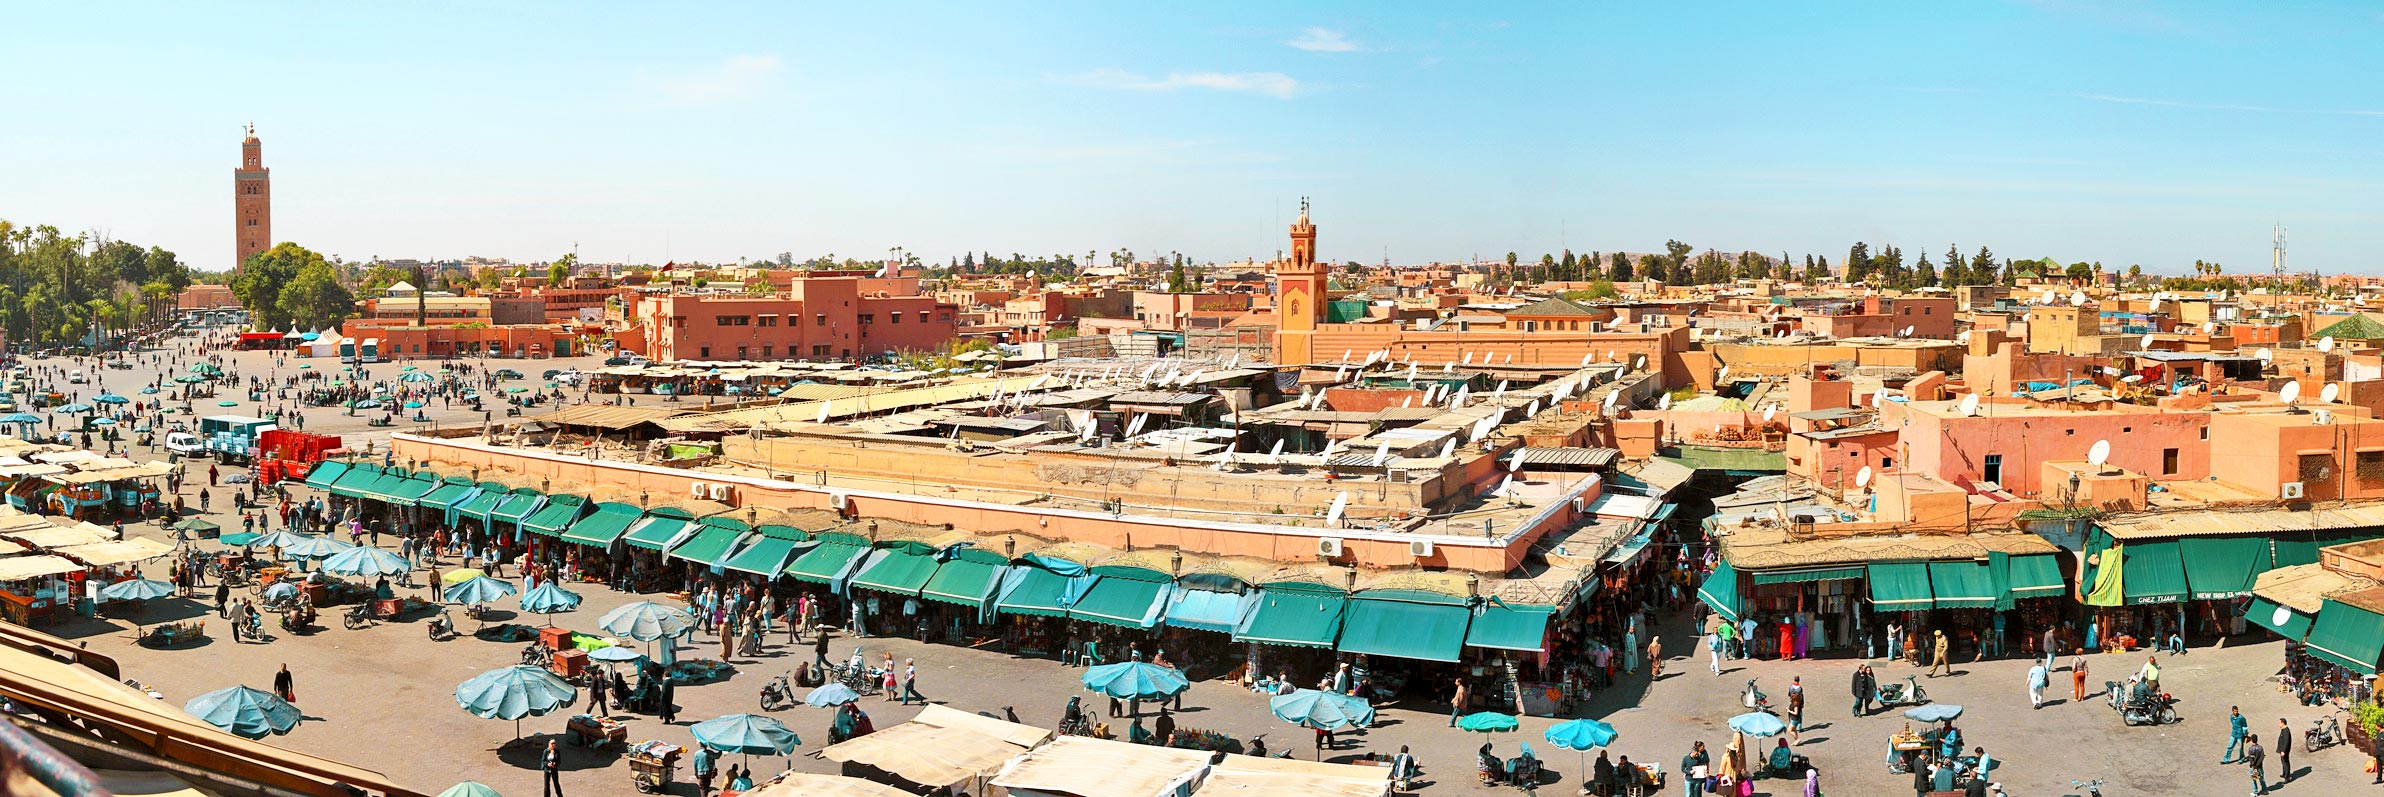 Marokko - Djemaa el Fna, Marrakesch